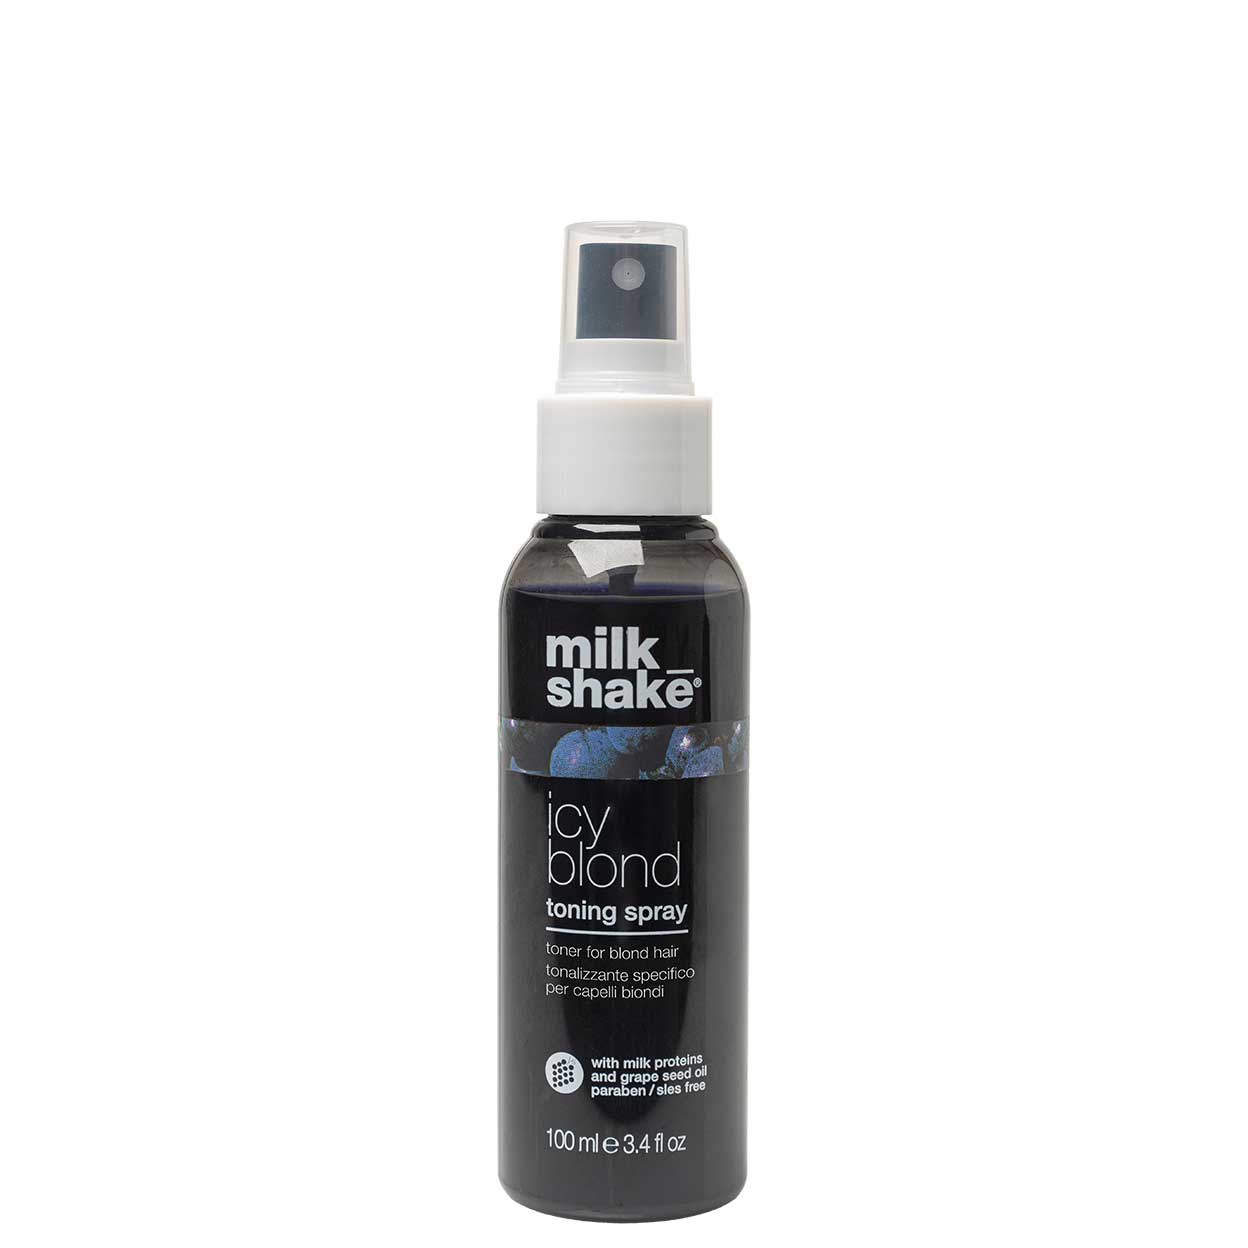 Milkshake icy blond toning spray 100mL